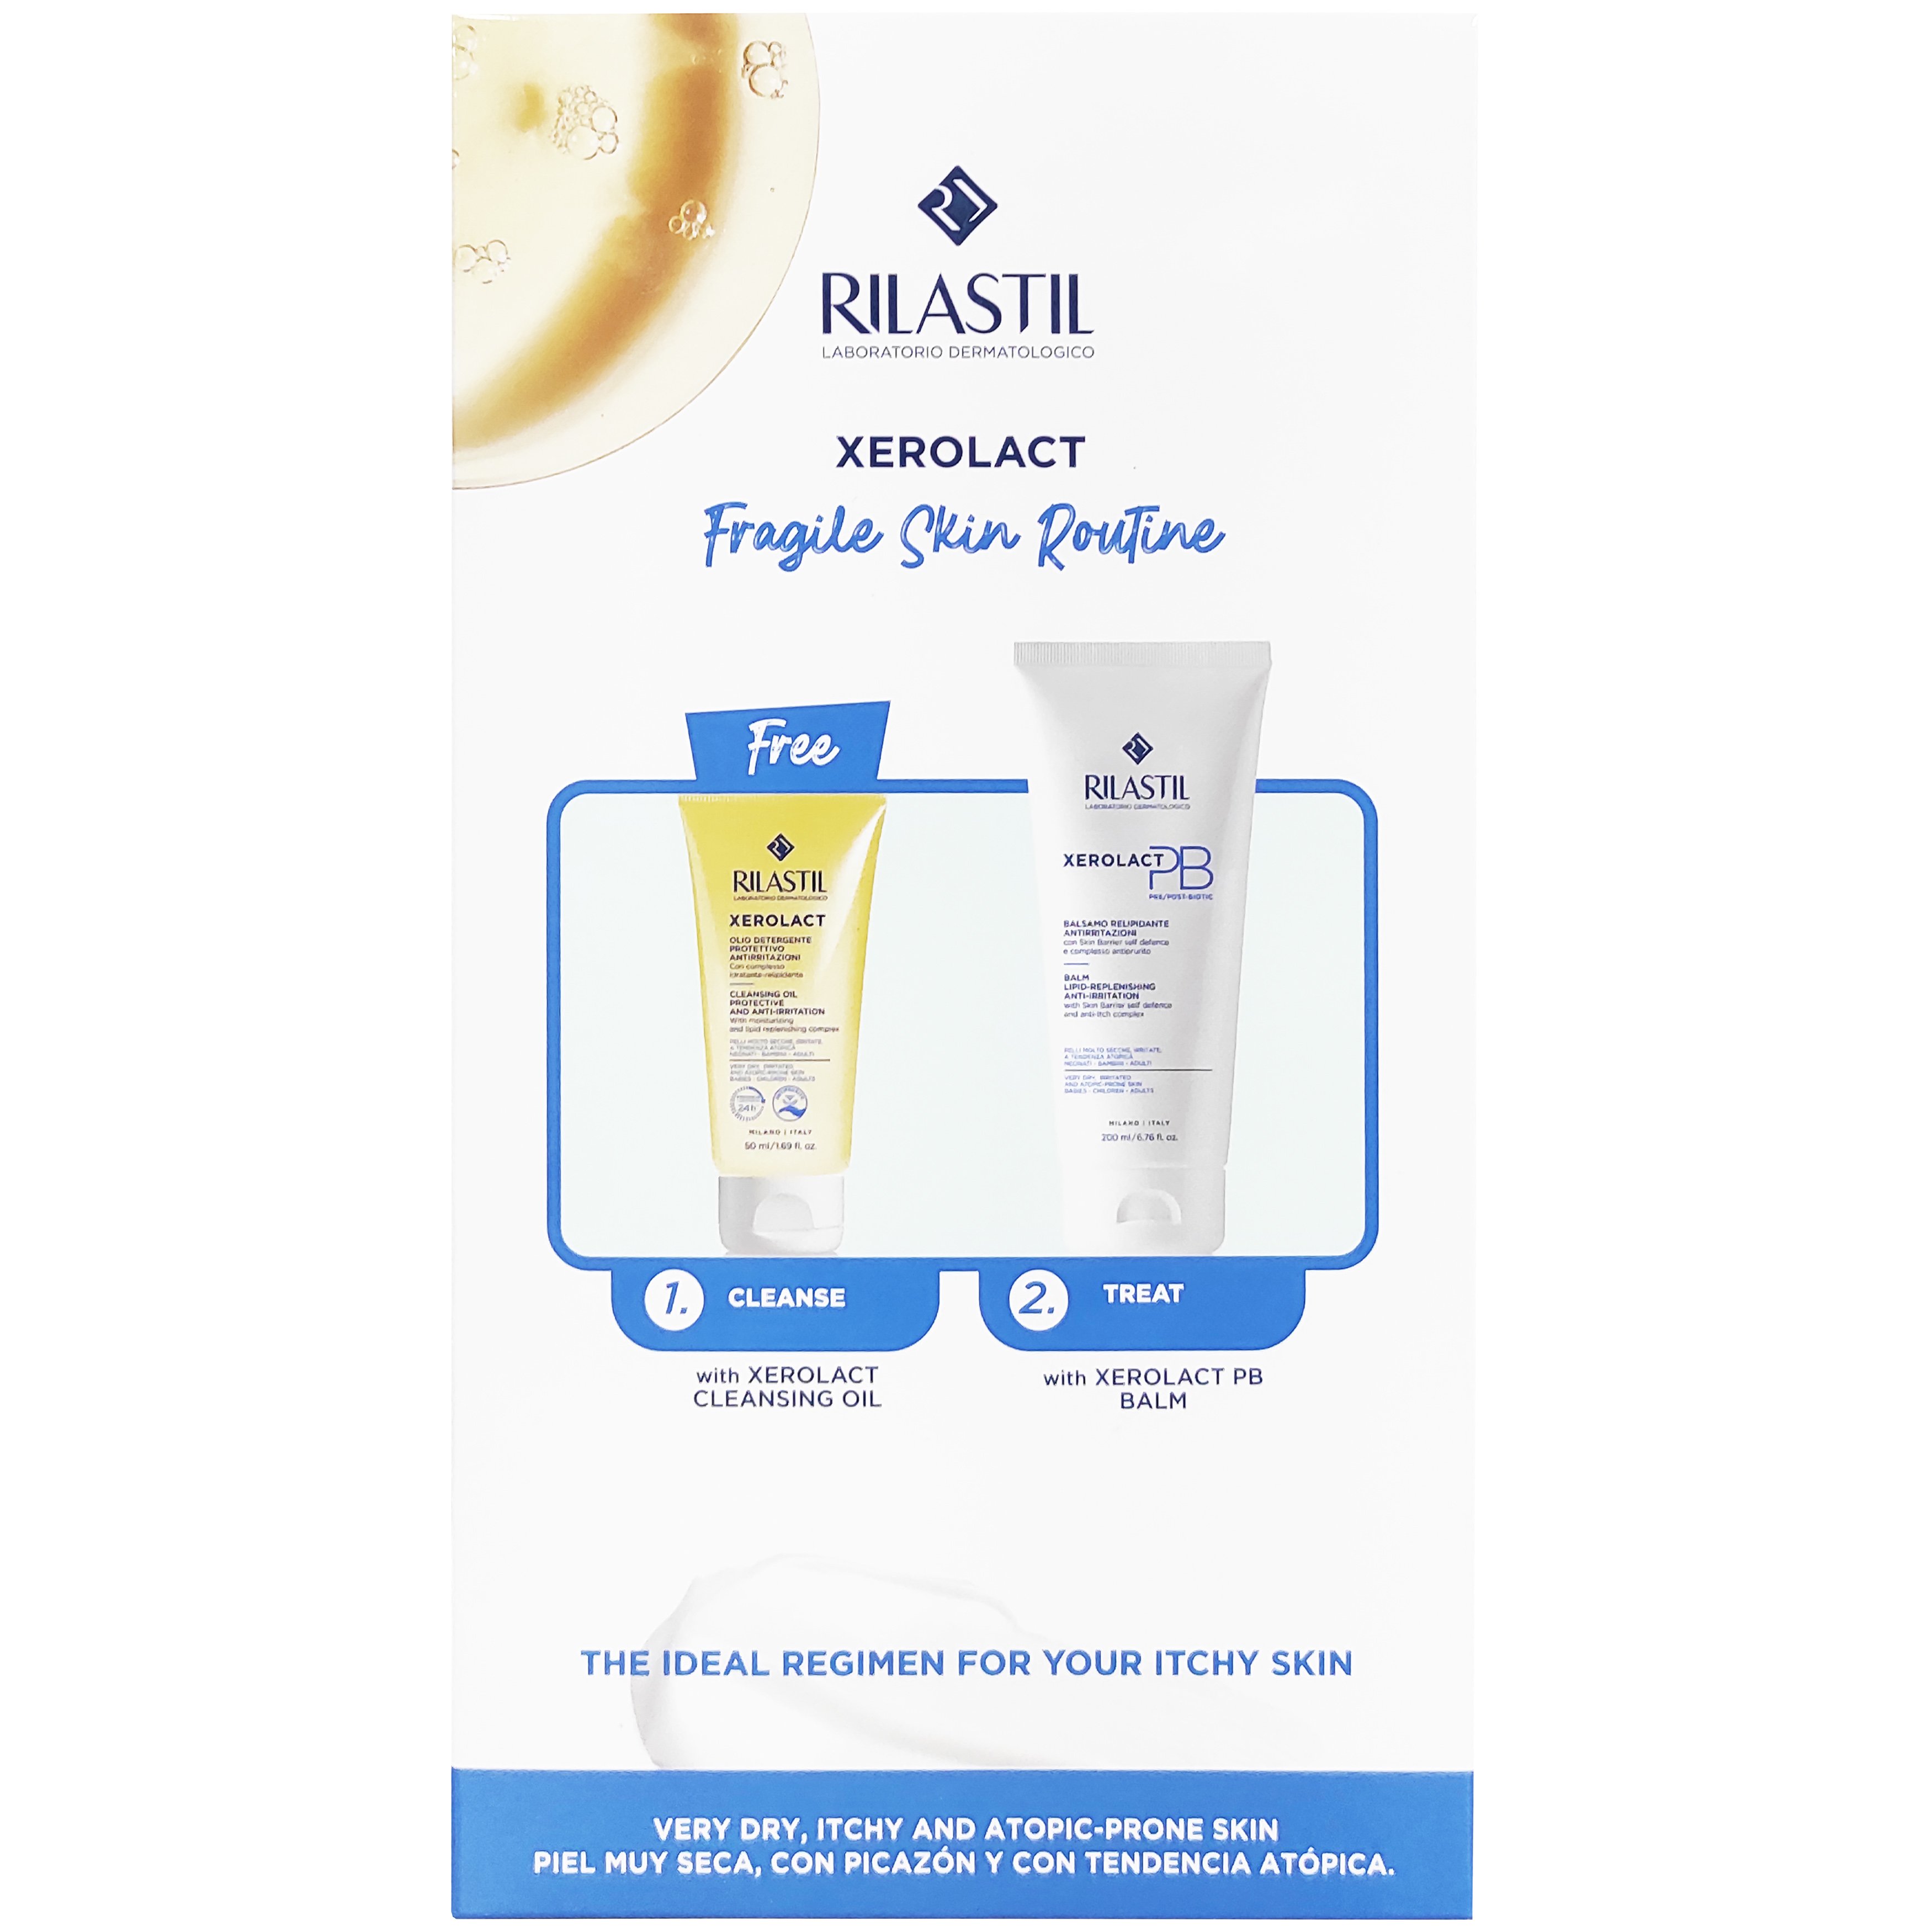 Rilastil Promo Xerolact Fragile Skin Routine PB Lipid Replenishing Anti-Irritation Balm 200ml & Δώρο Protective & Anti-Irritation Cleansing Body Oil 50ml